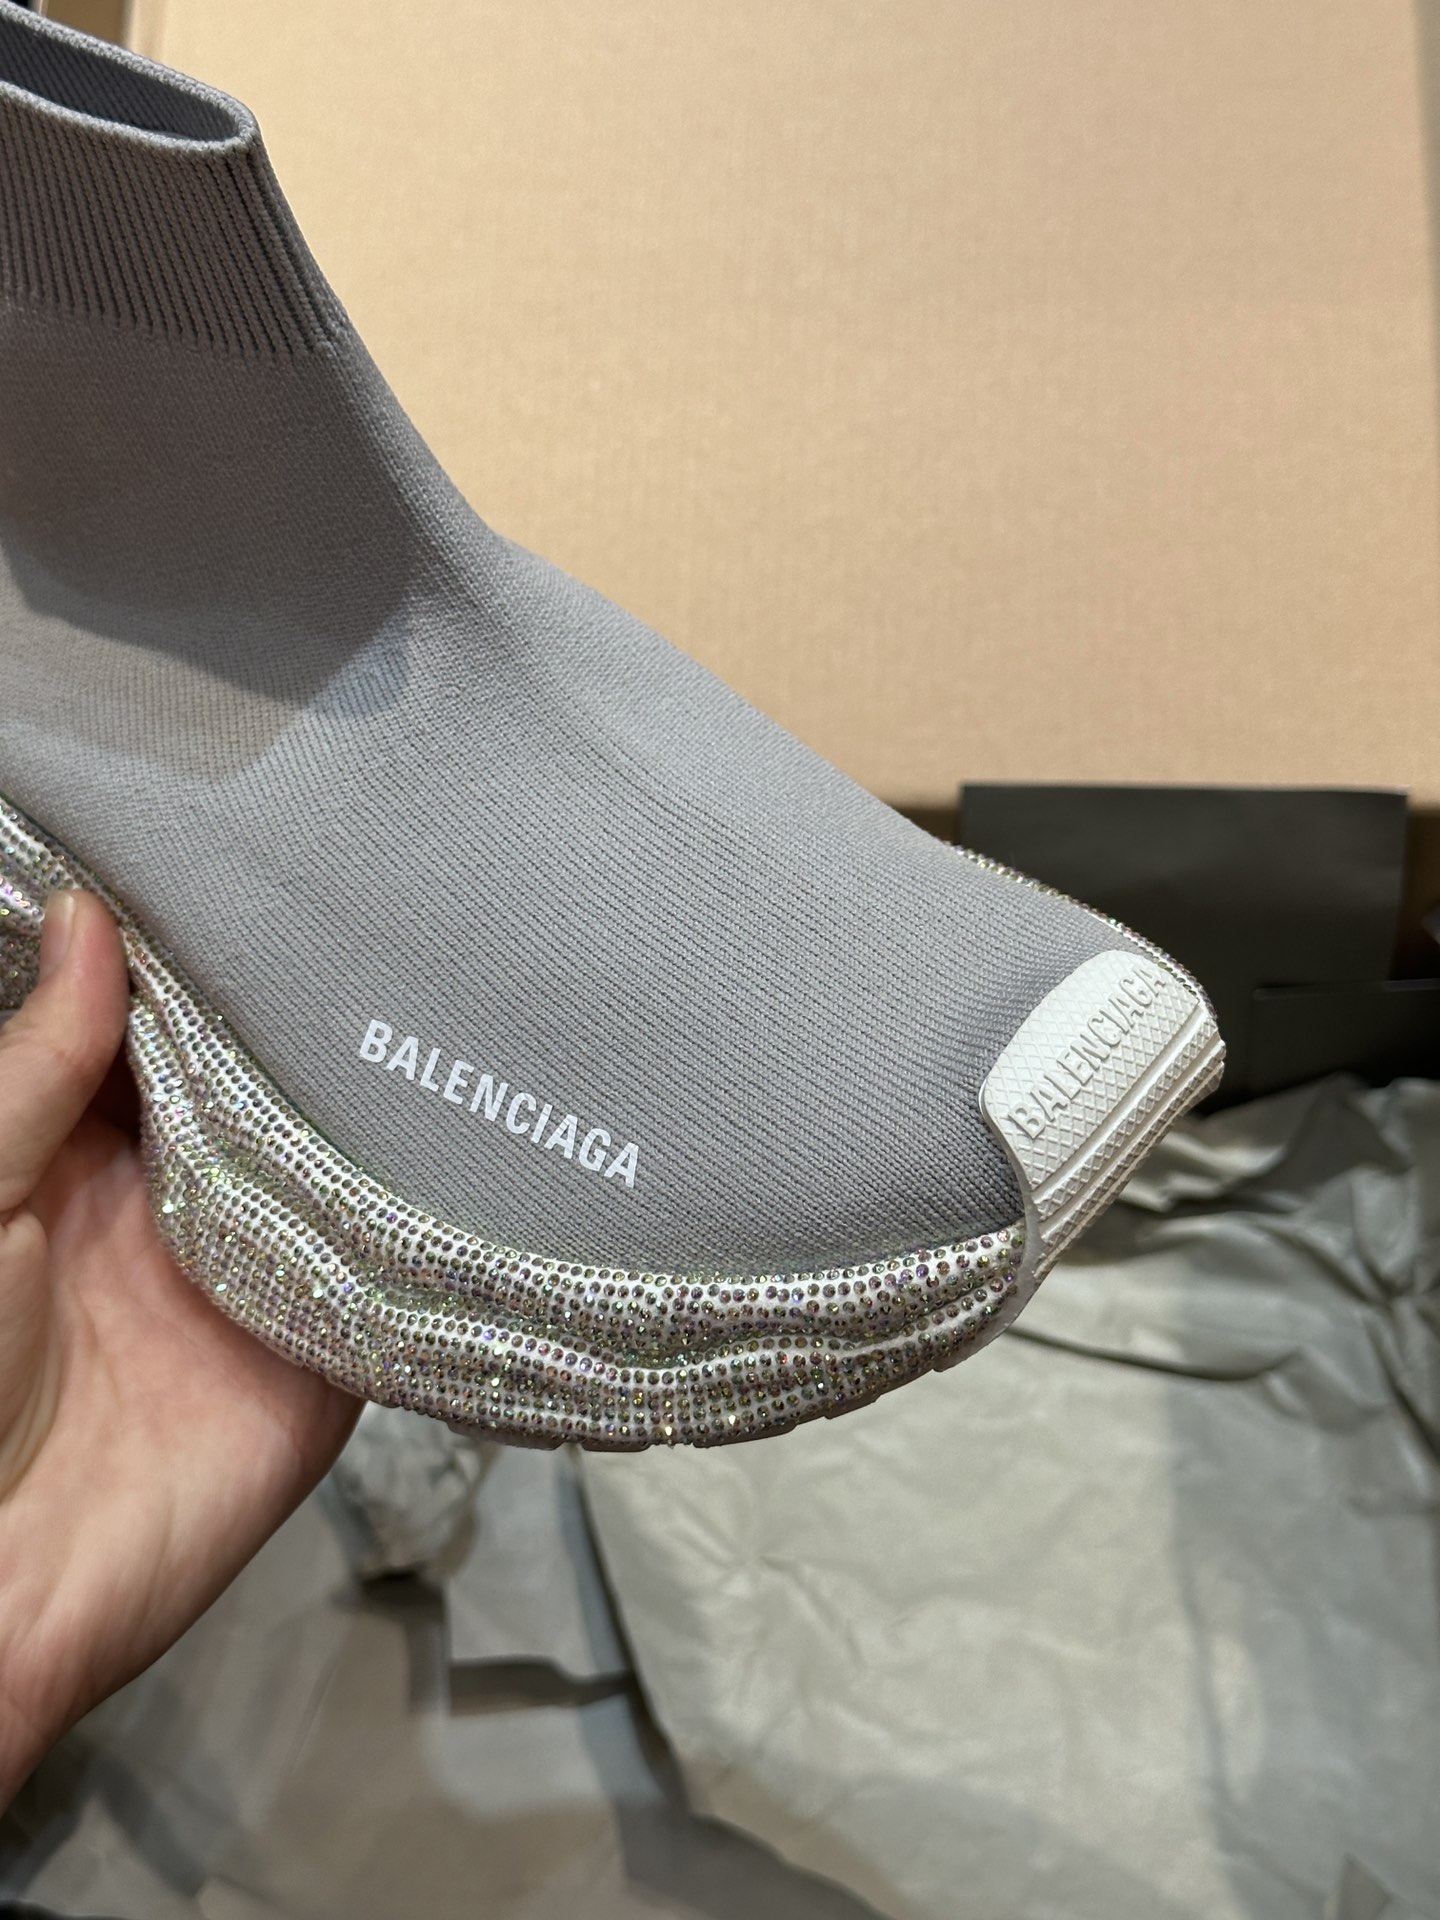 Balenciaga巴黎世家手工烫钻3xl袜子鞋系列潮酷情侣款复古休闲运动鞋系列推出探索时尚界对于原创与